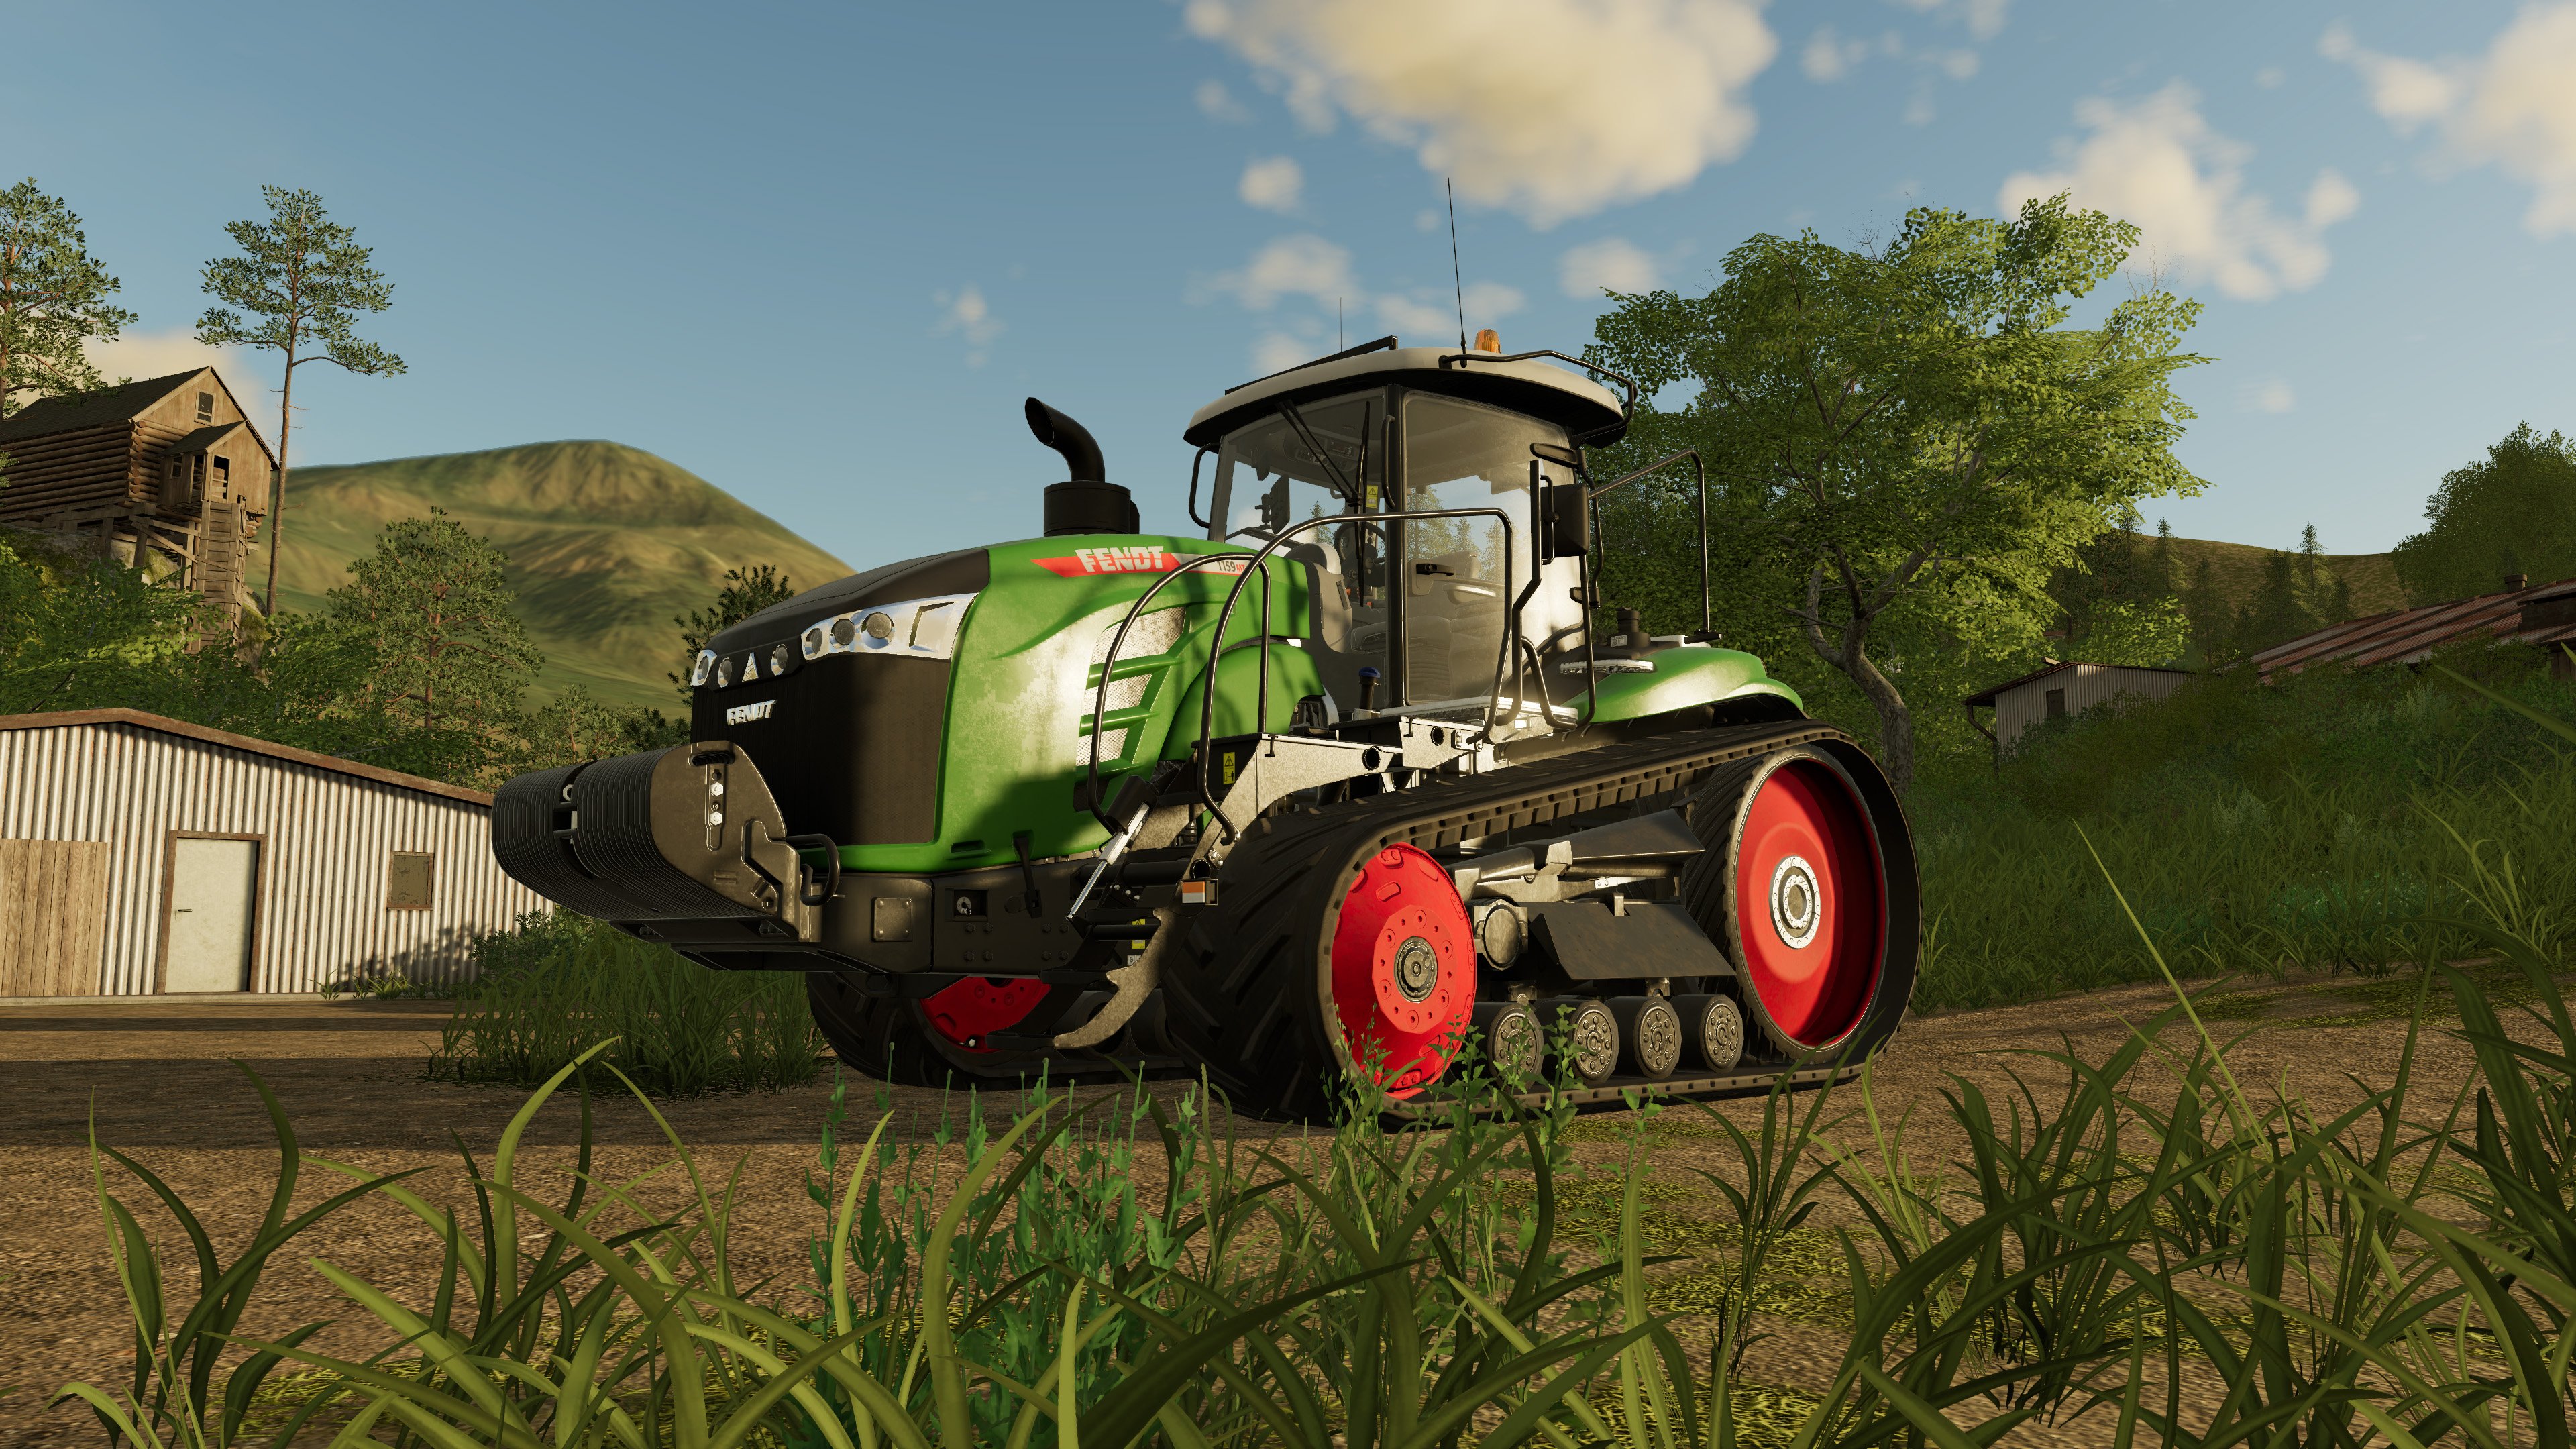 Farming Simulator 19 - PlayStation 4 